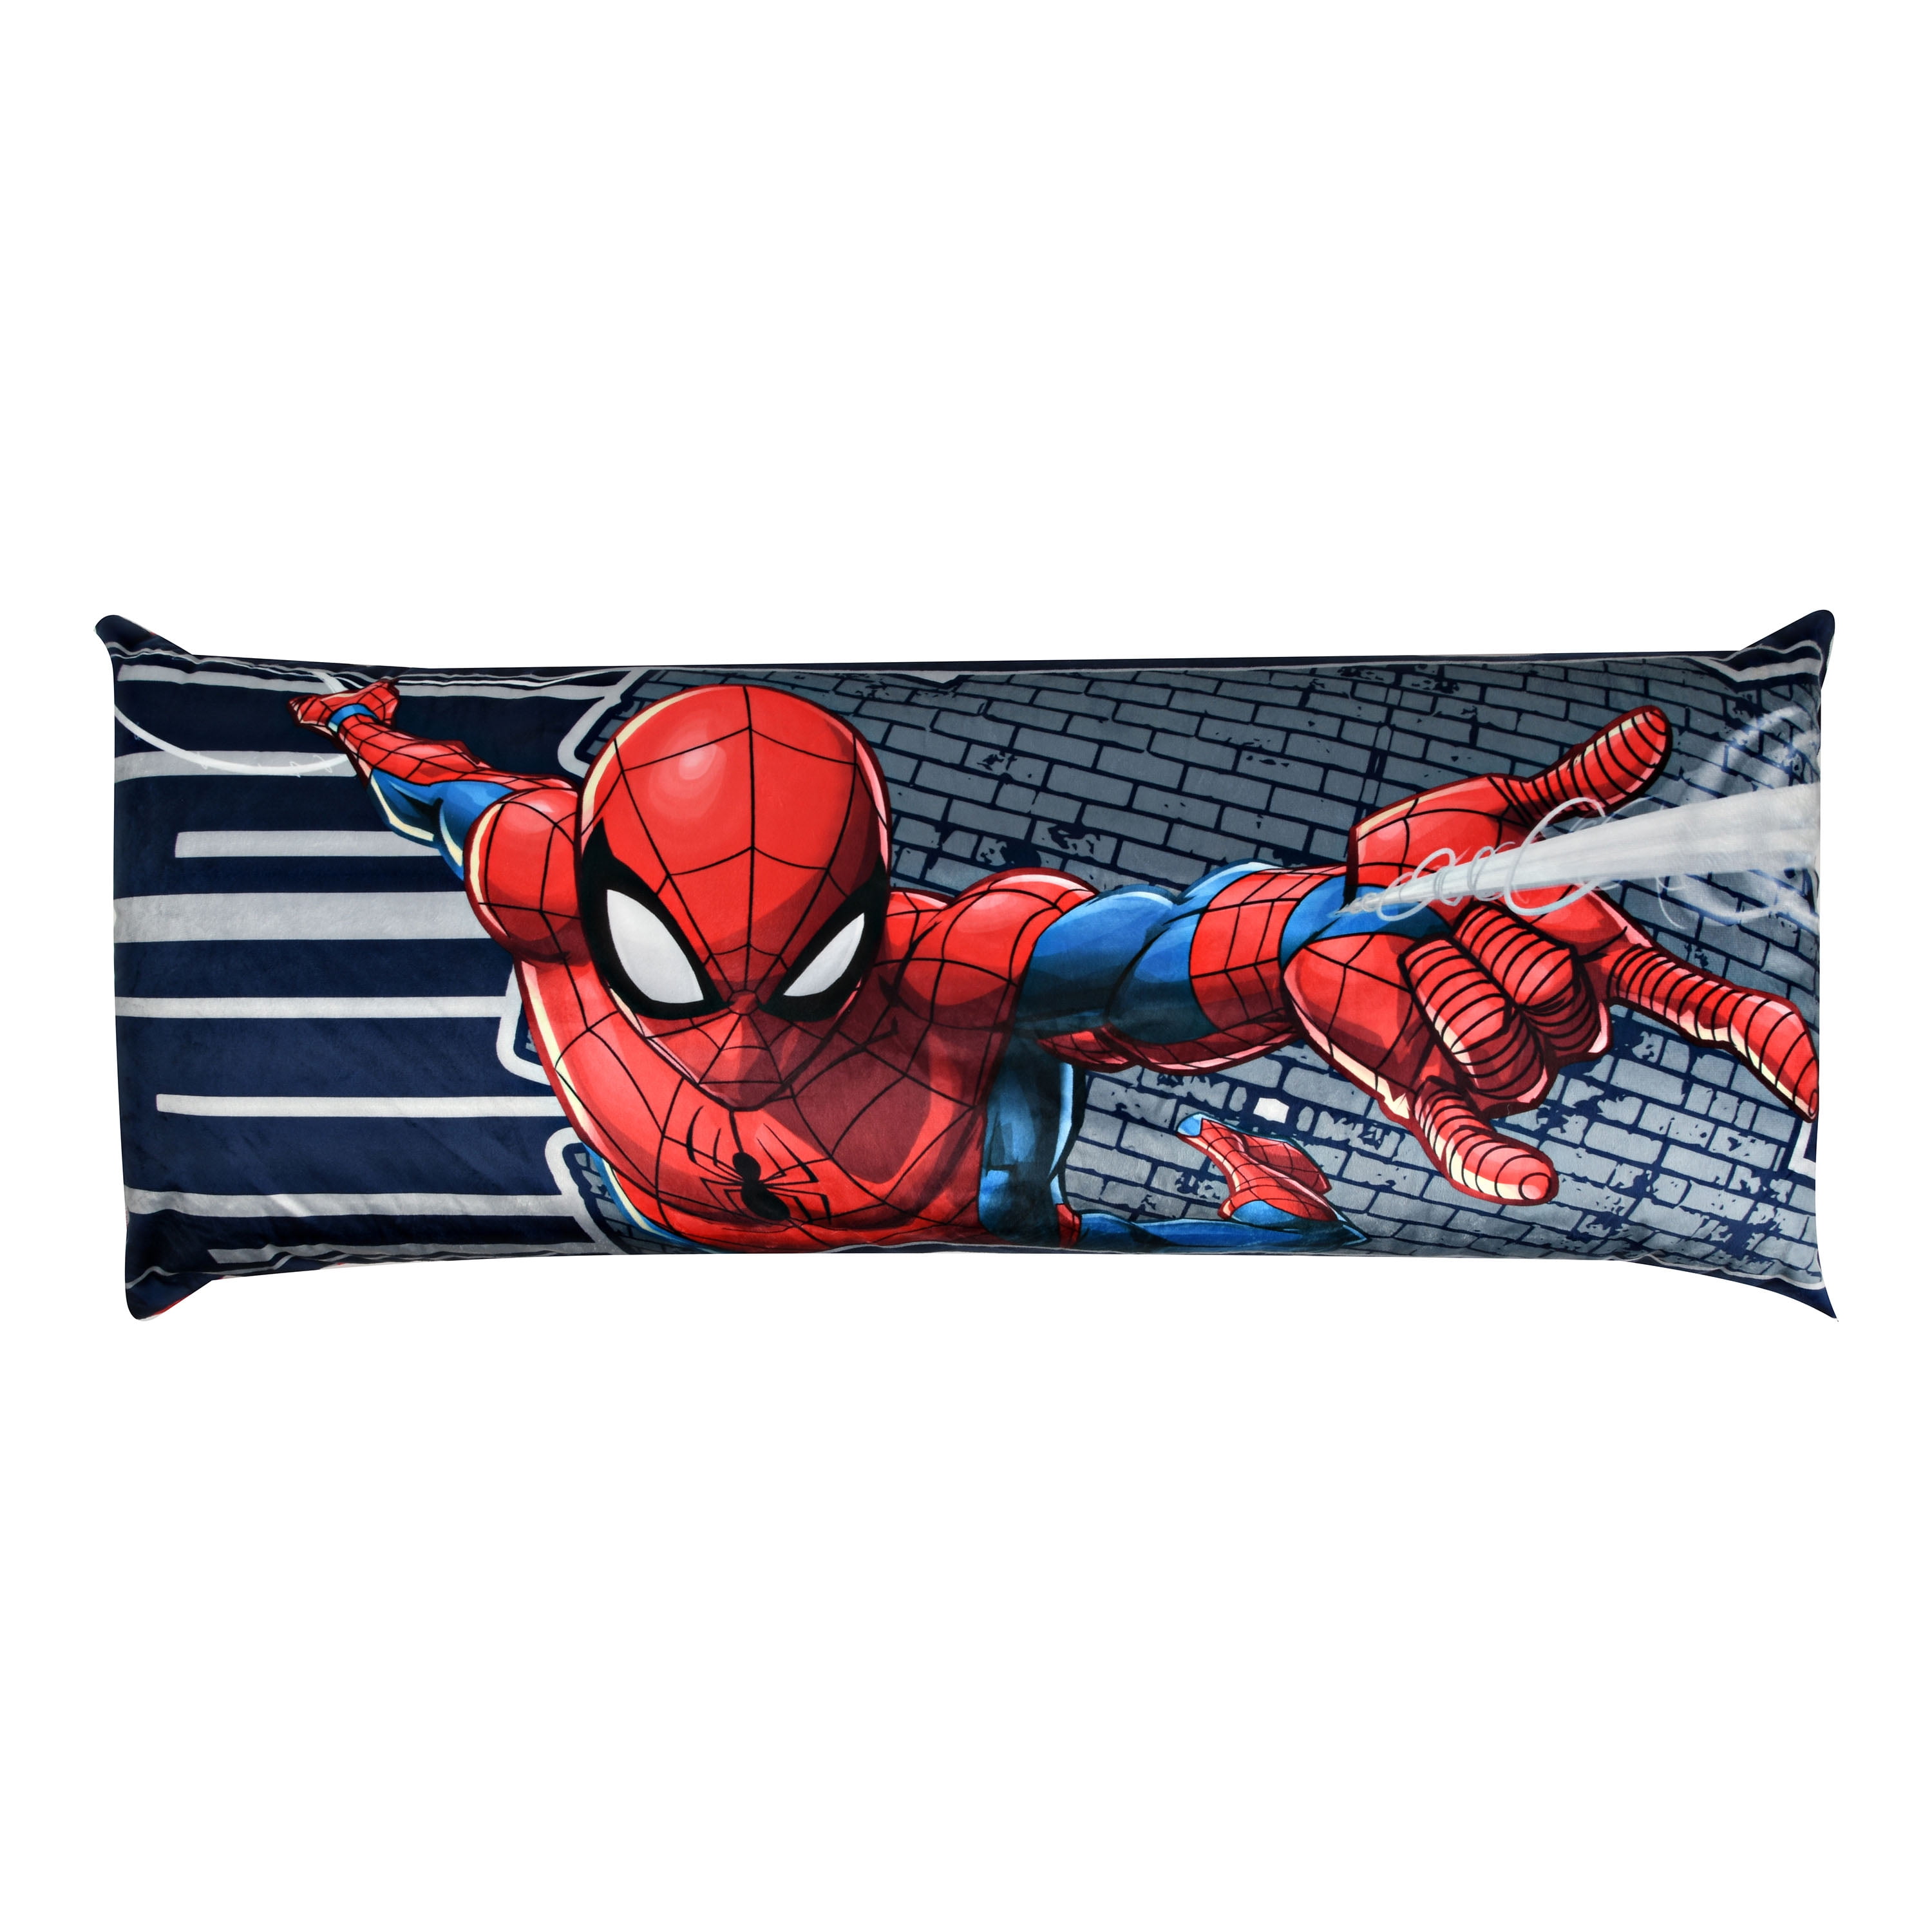 Details about   Spiderman Pillow Case Red Blue Spider Sense 